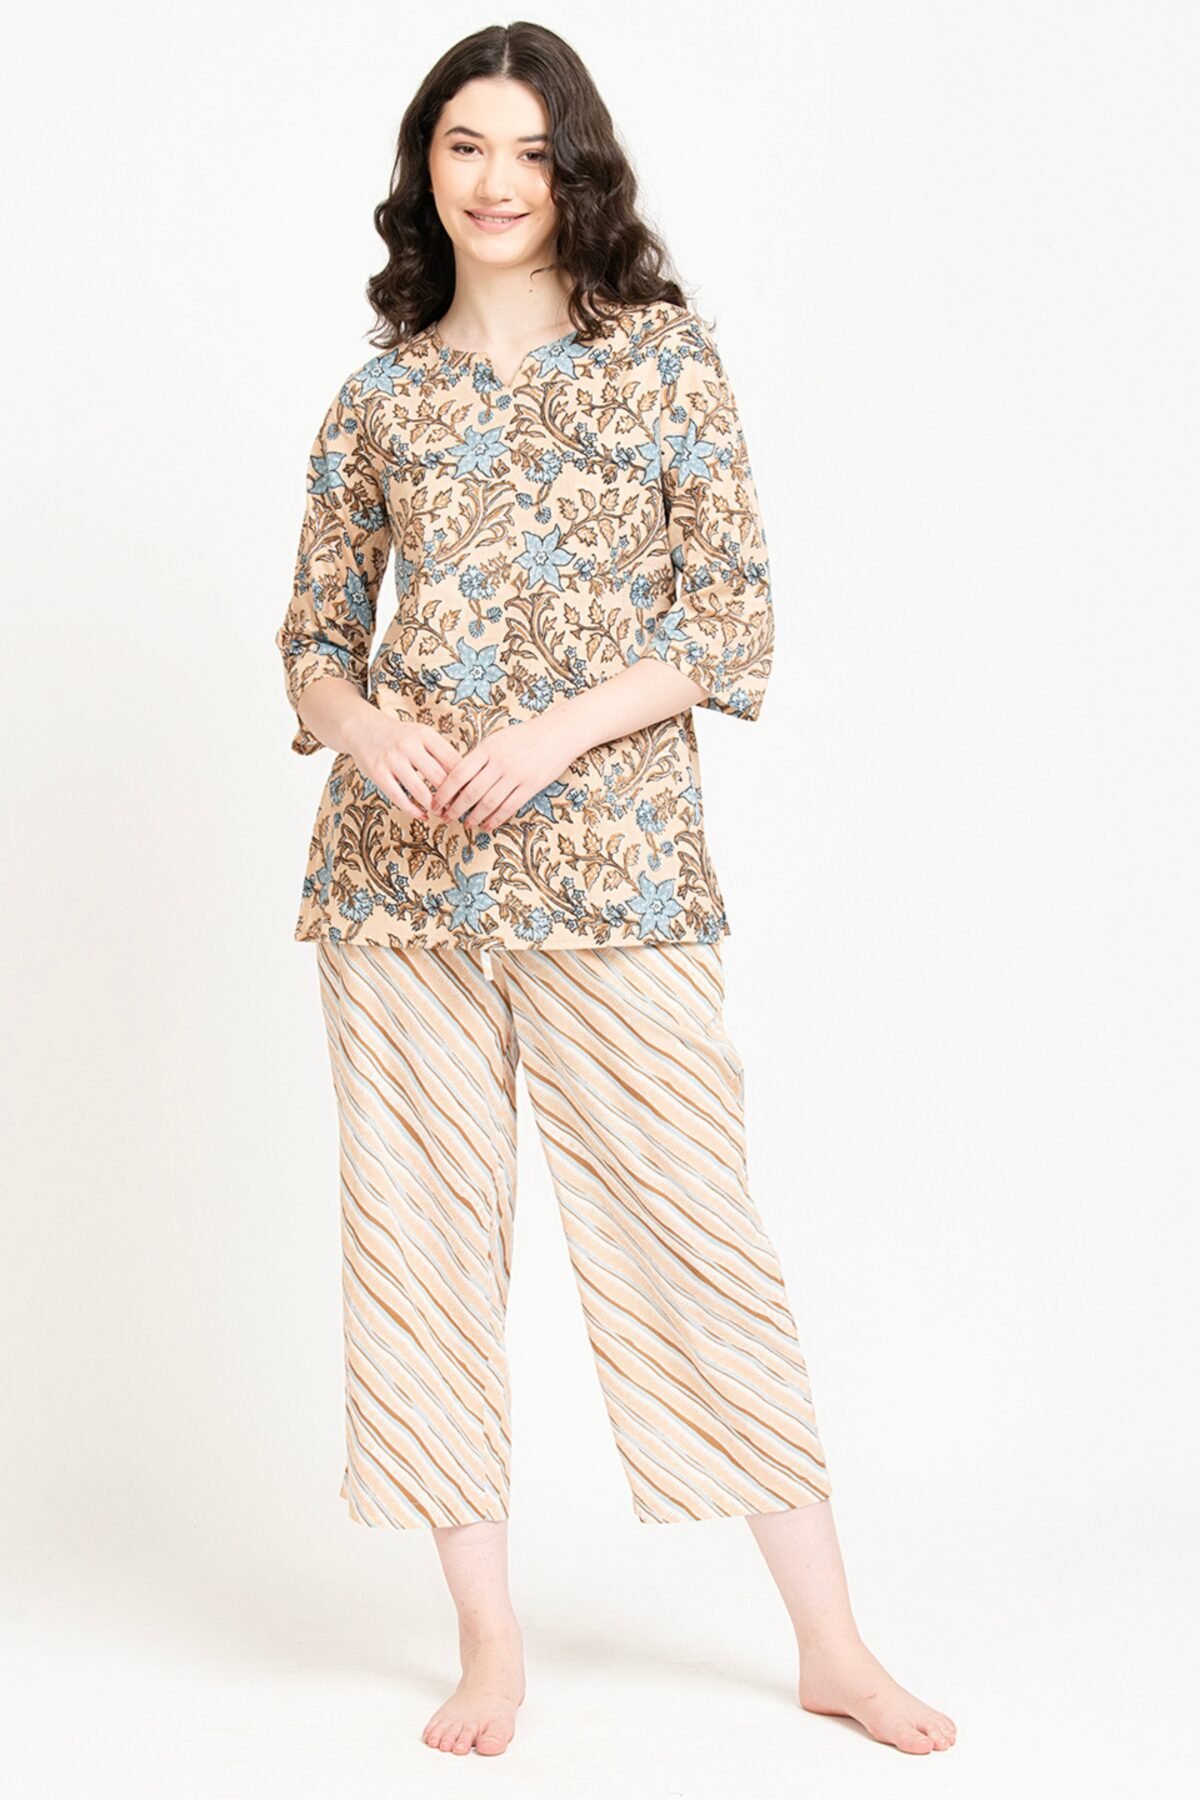 Women's Beige and Ice Blue Jaal Pajama set